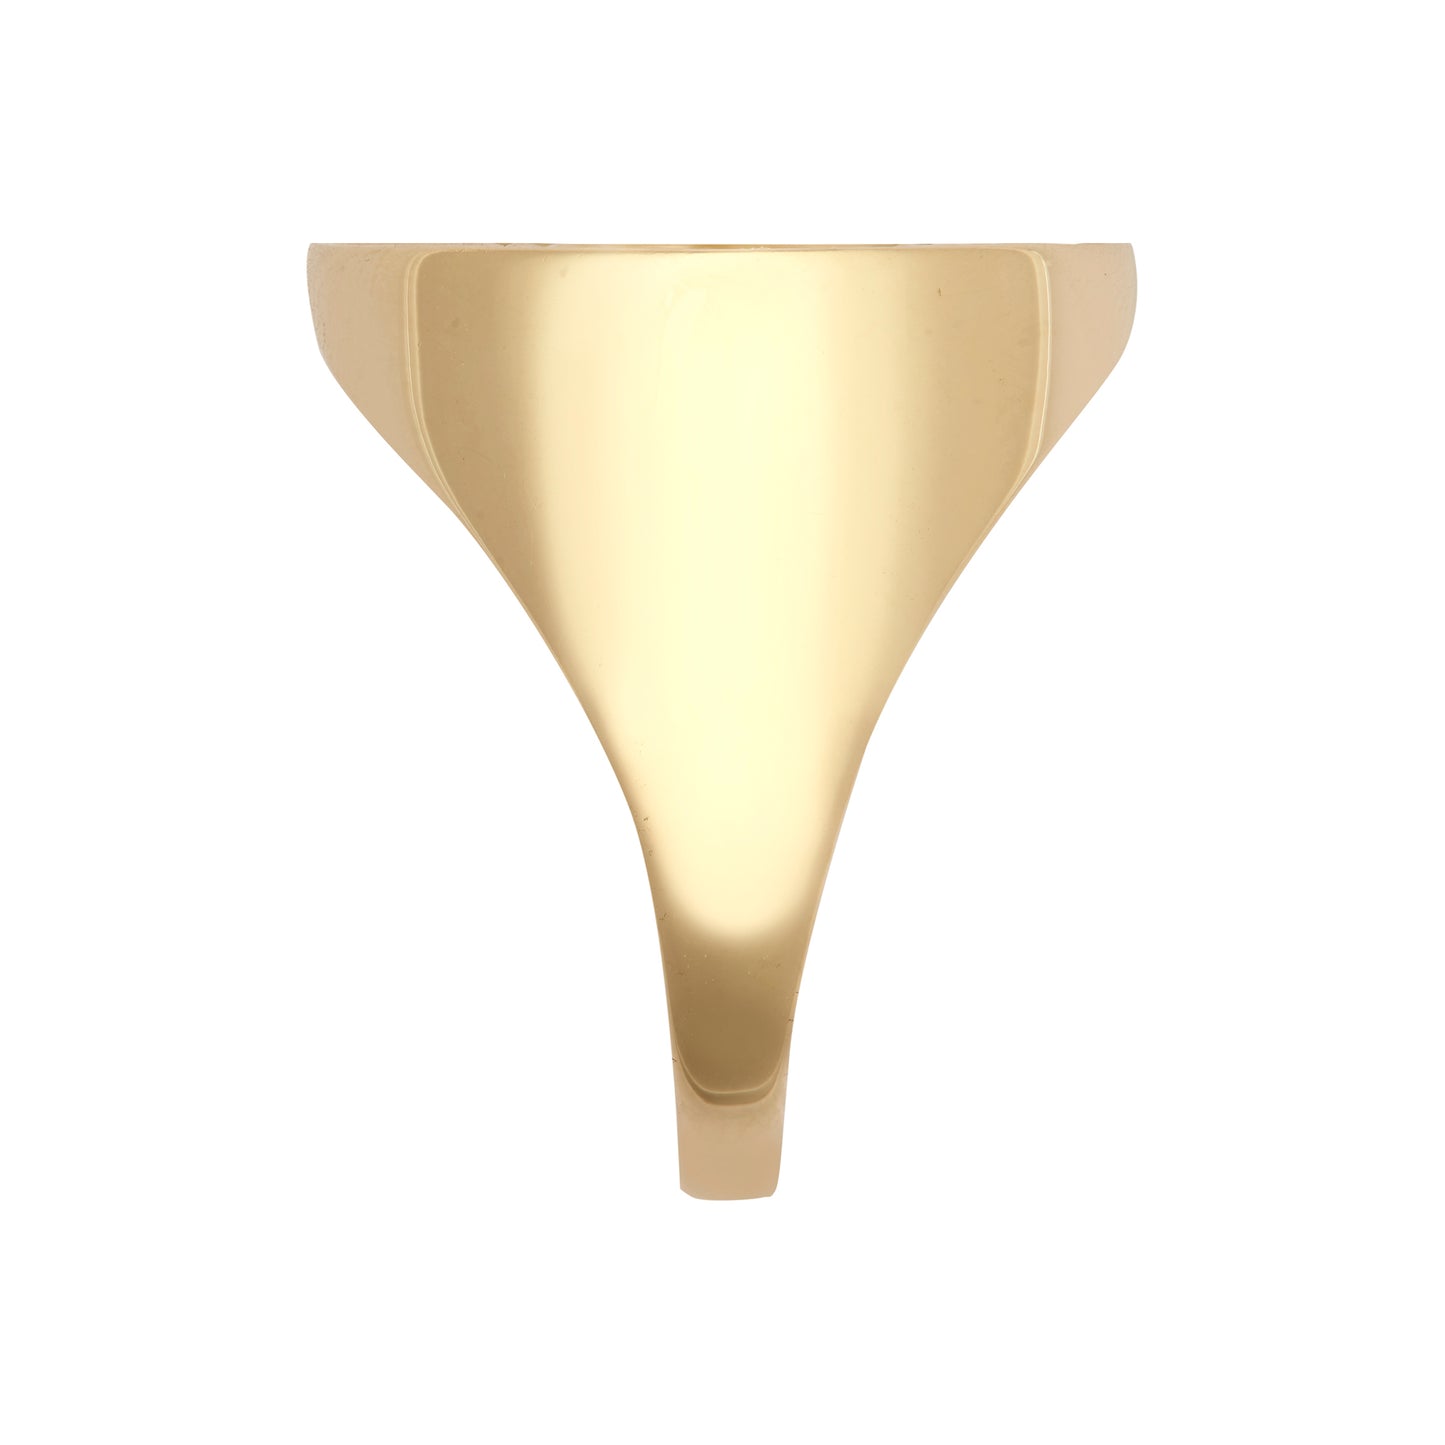 9ct Gold  Domed Polished St George Ring (Full Sov Size) - JRN172-F